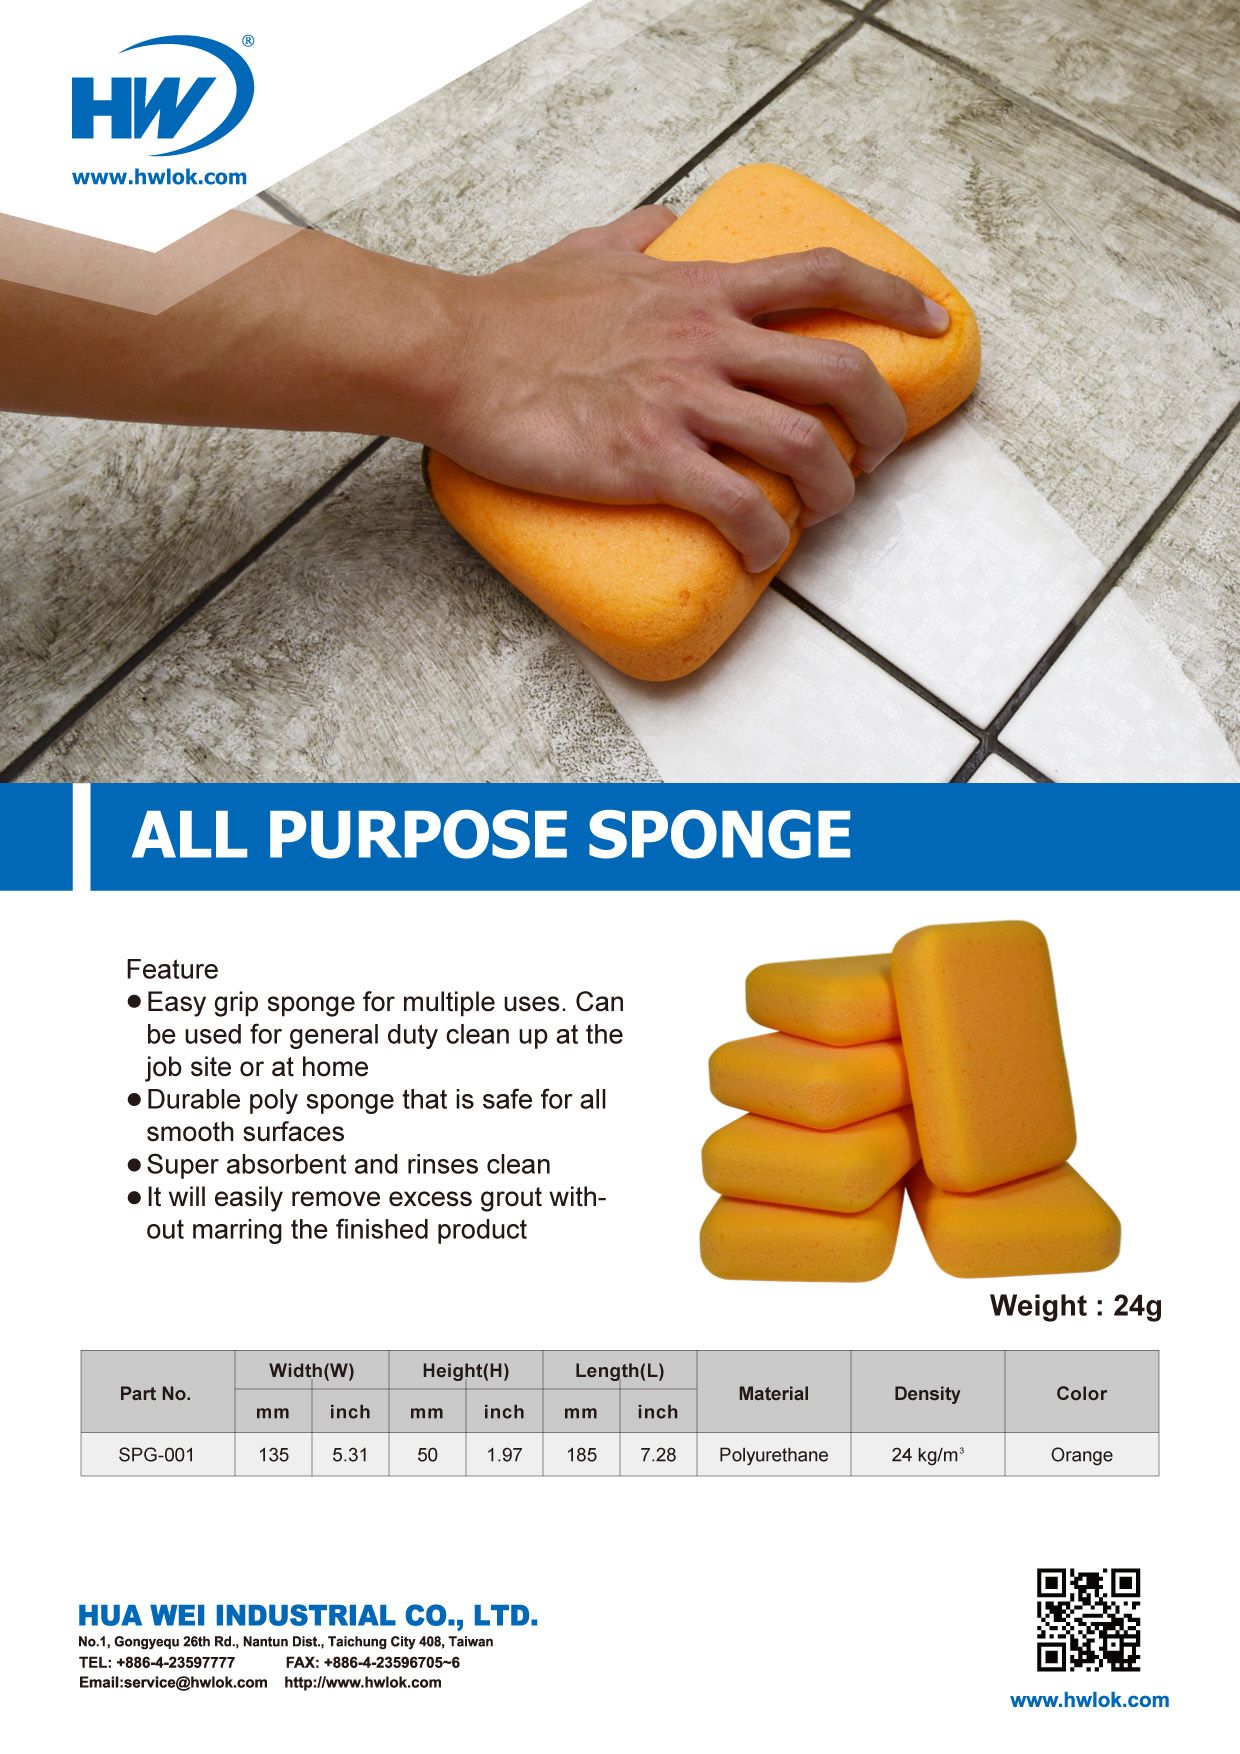 All Purpose Sponge-DM